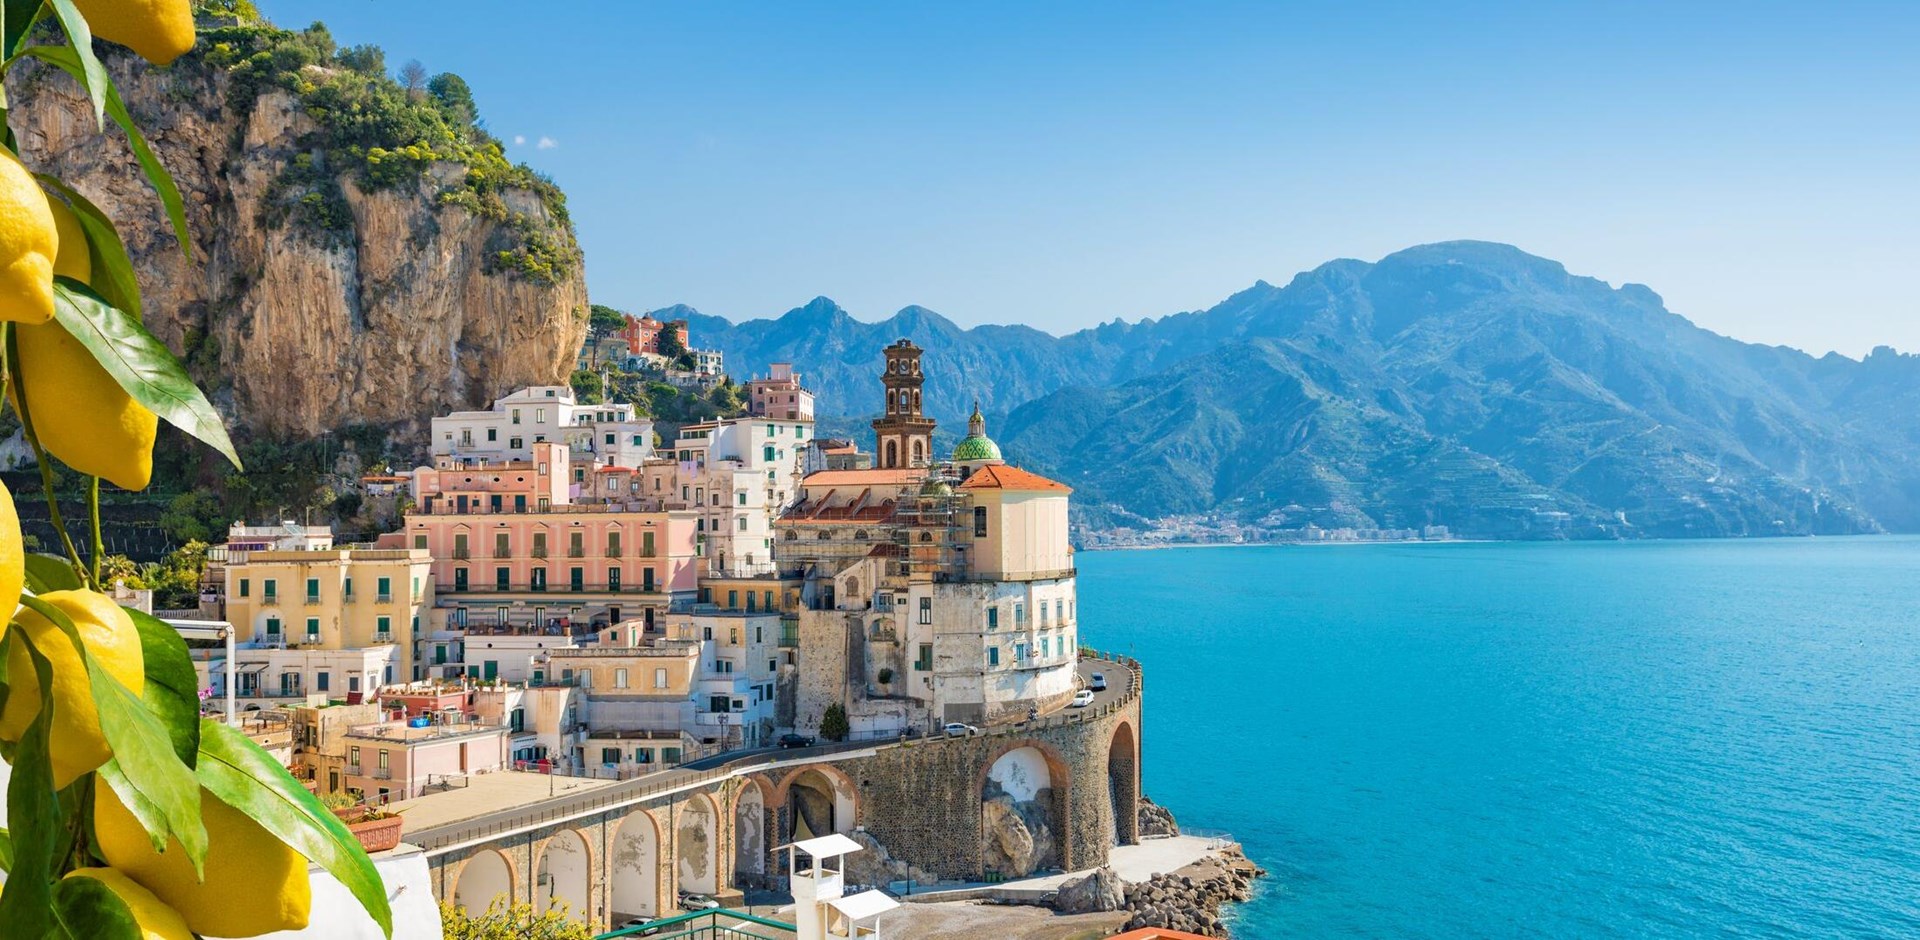 Small city Atrani on Amalfi Coast in province of Salerno, Campania region, Italy. Amalfi coast on Gulf of Salerno is popular travel and holyday destination in Italy. Ripe yellow lemons in foreground.